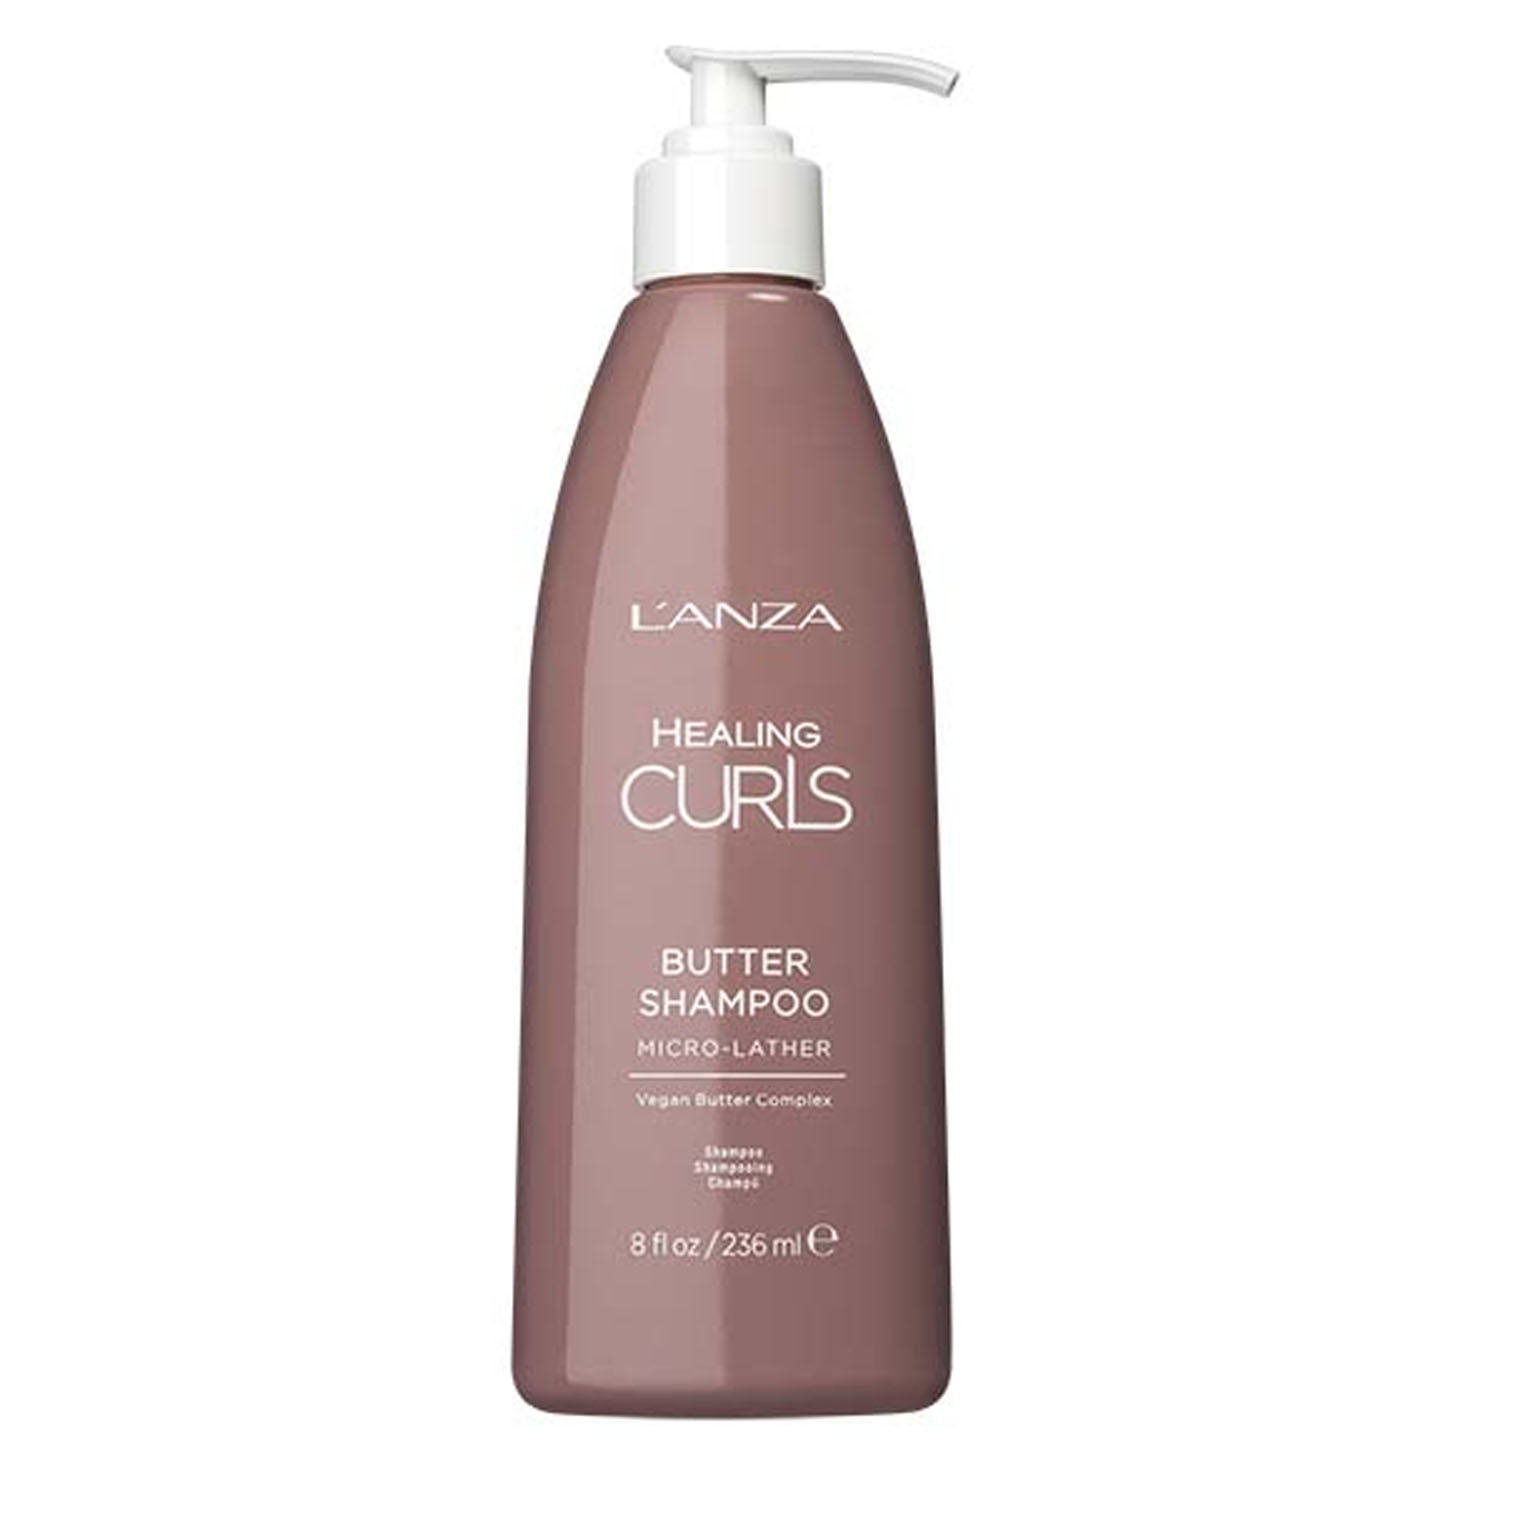 LANZA Healing Curls Butter Shampoo Баттер шампунь для кудрявых волос